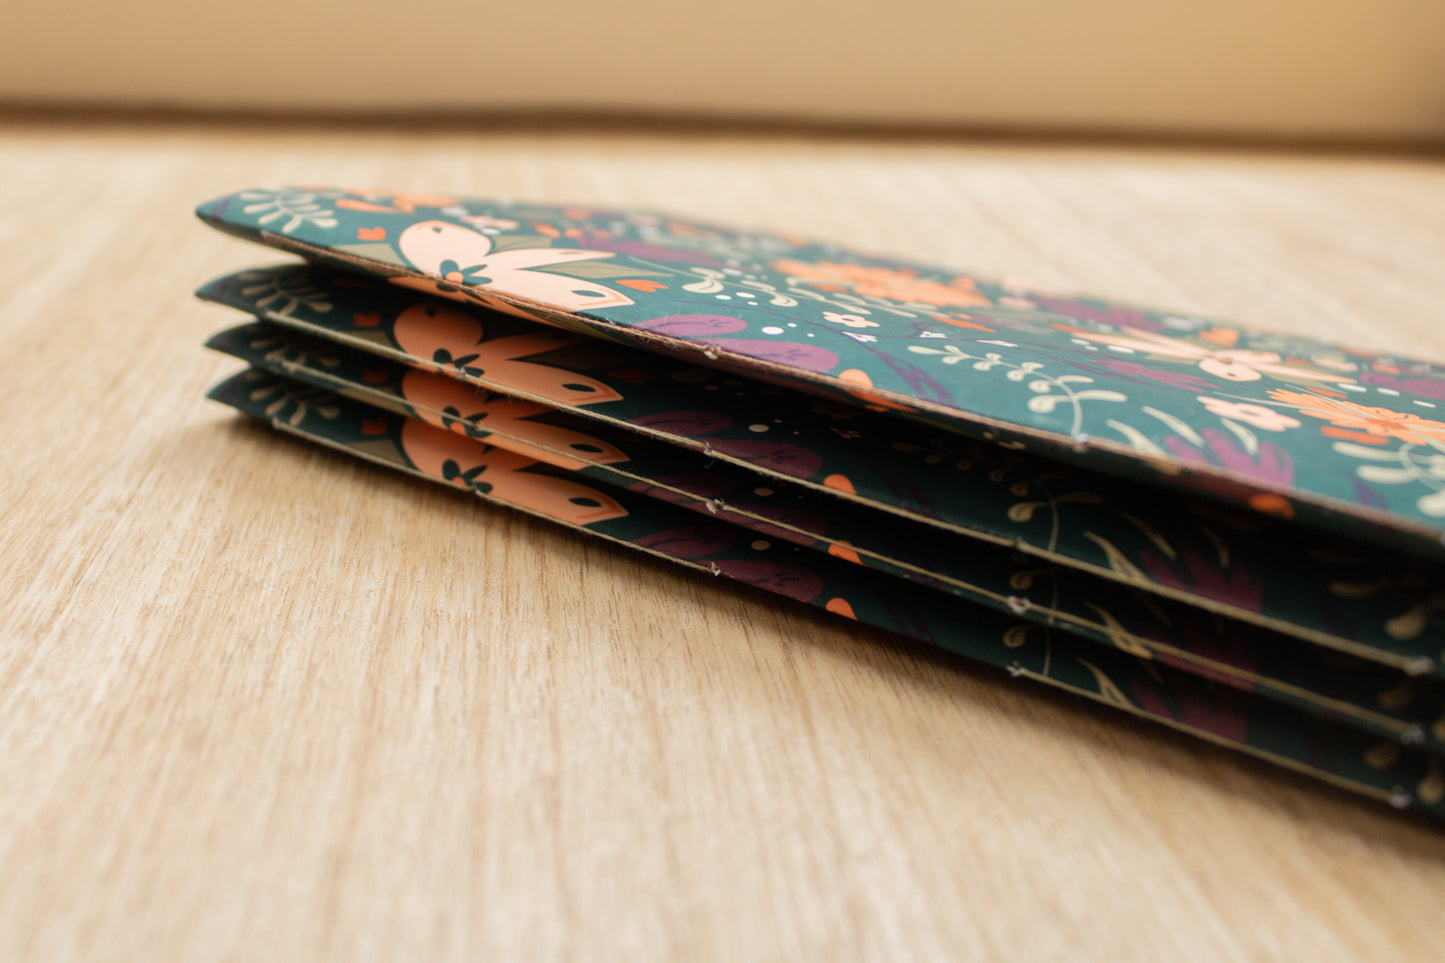 Handmade A5 notebook with autumnal floral design by MellowApricotStudio & KreativWerkstatt24 - side view of stitches